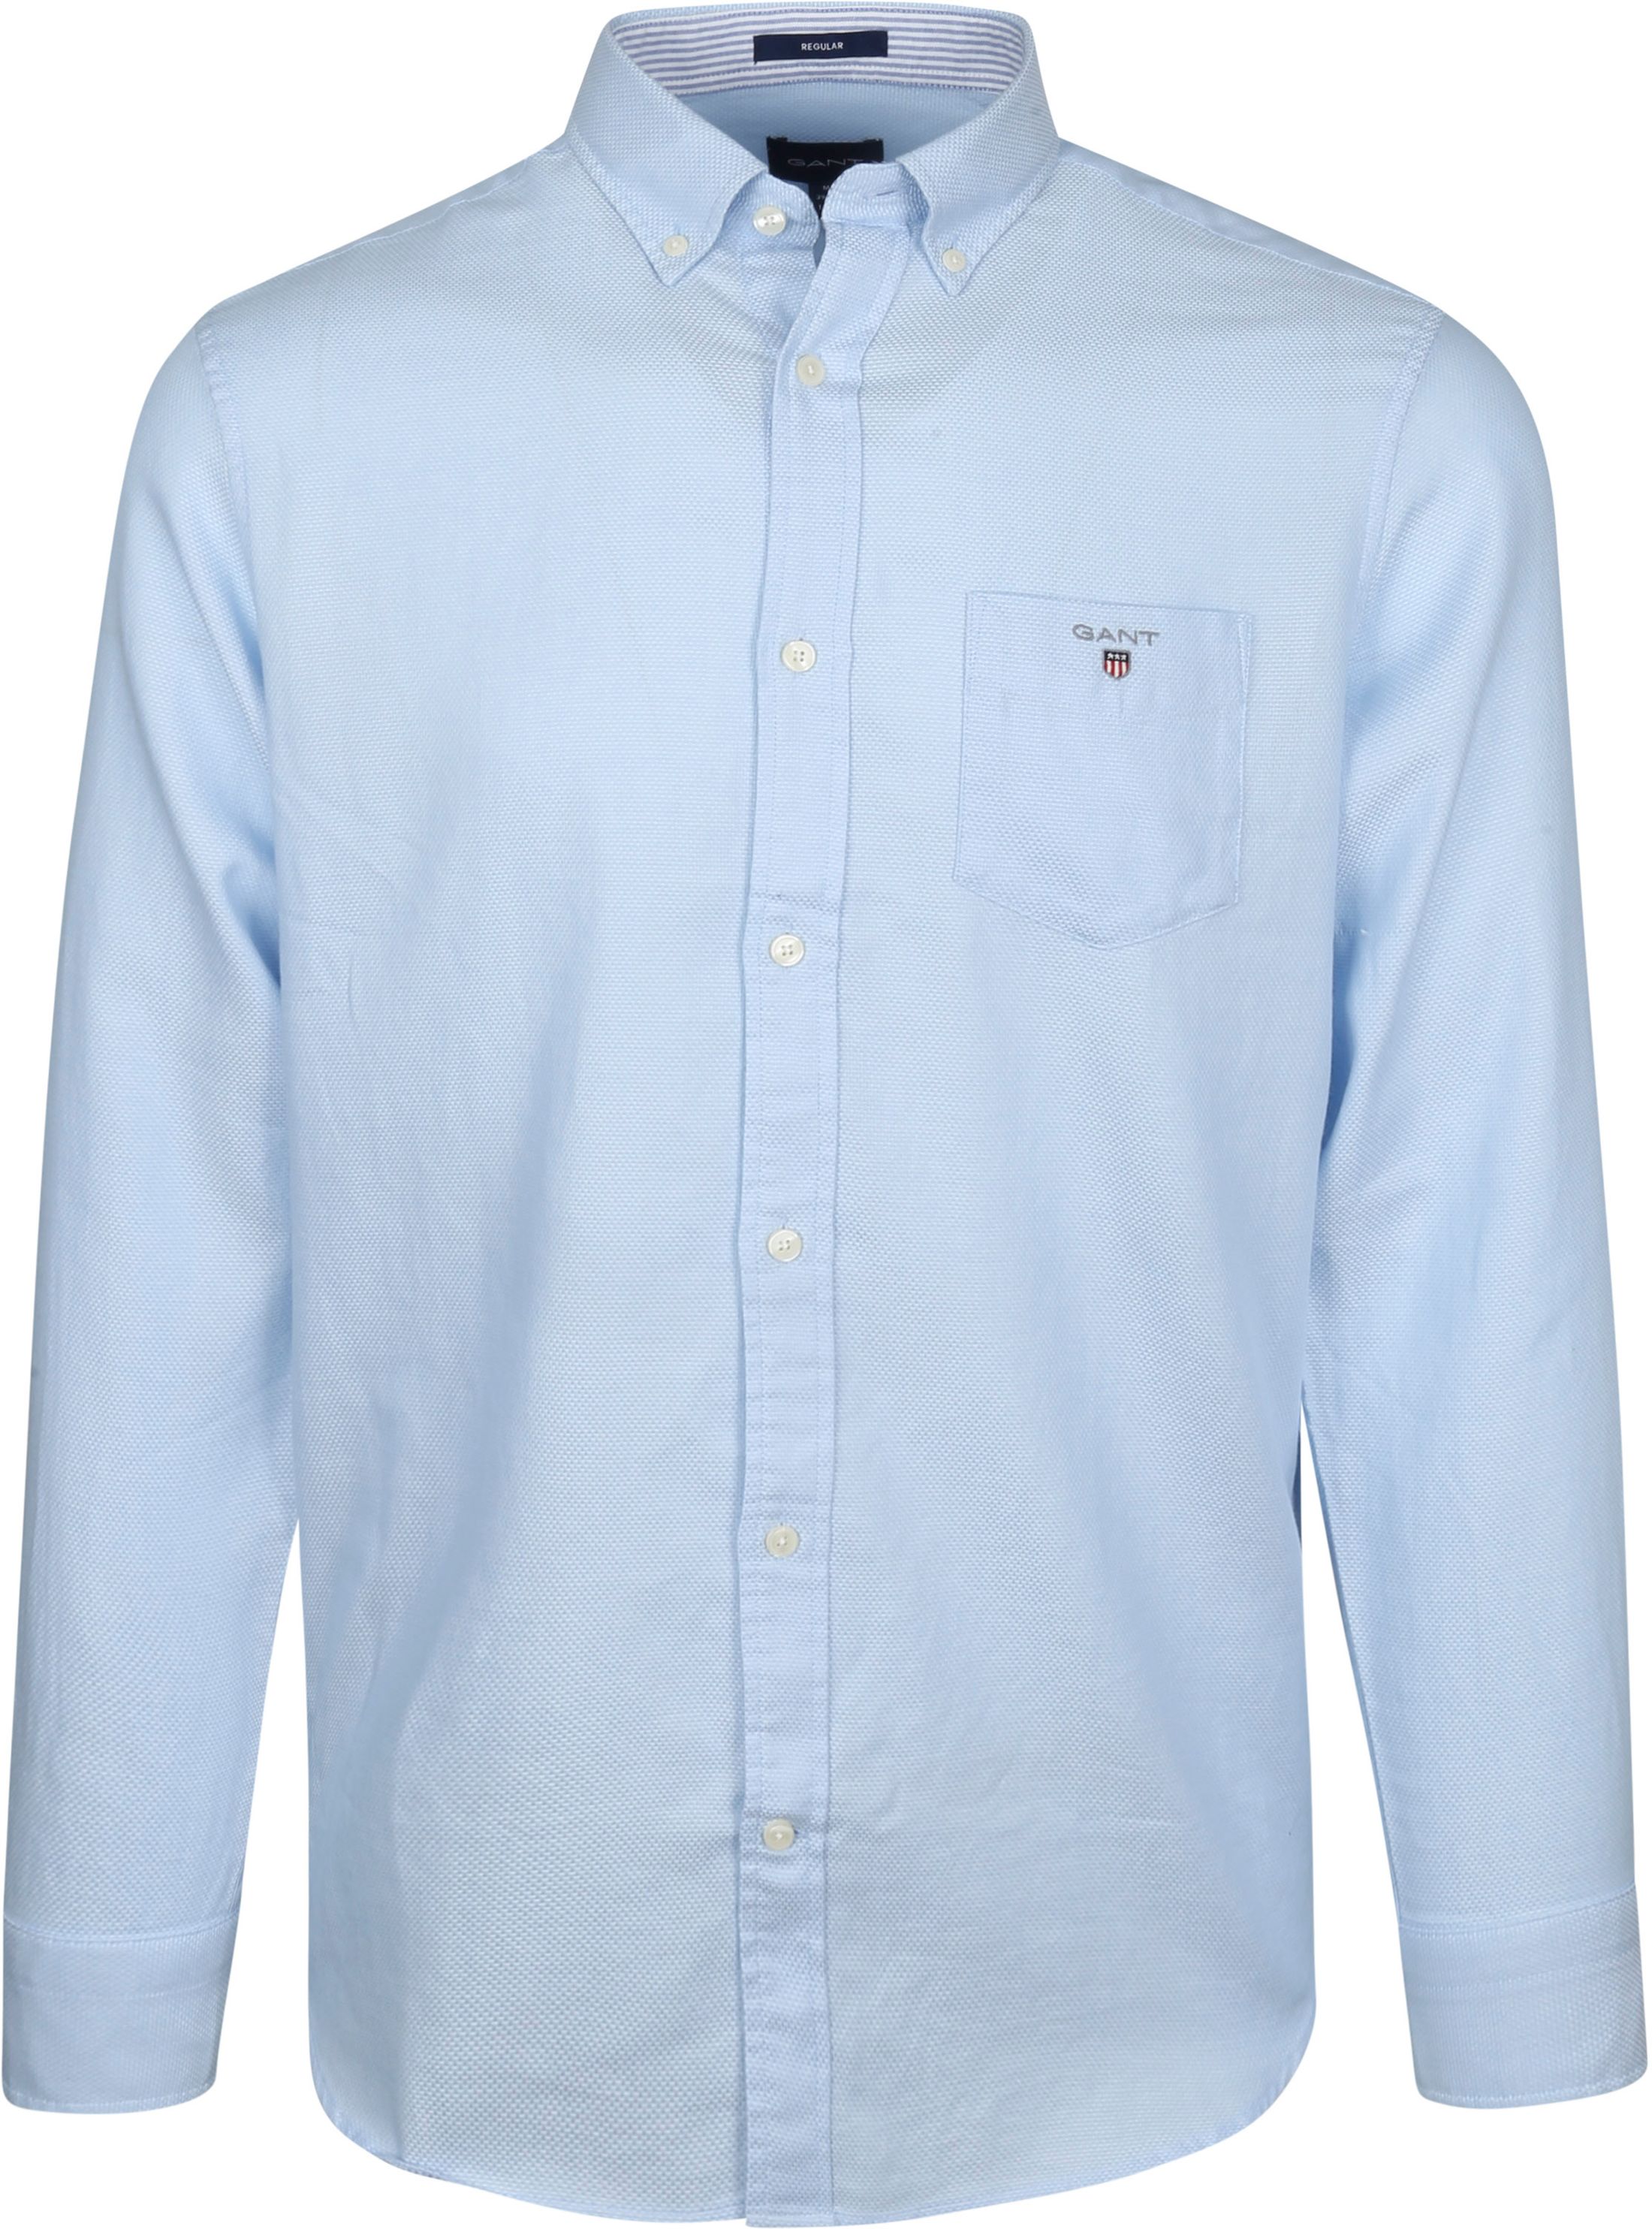 Gant original shirt structure blue size 3xl